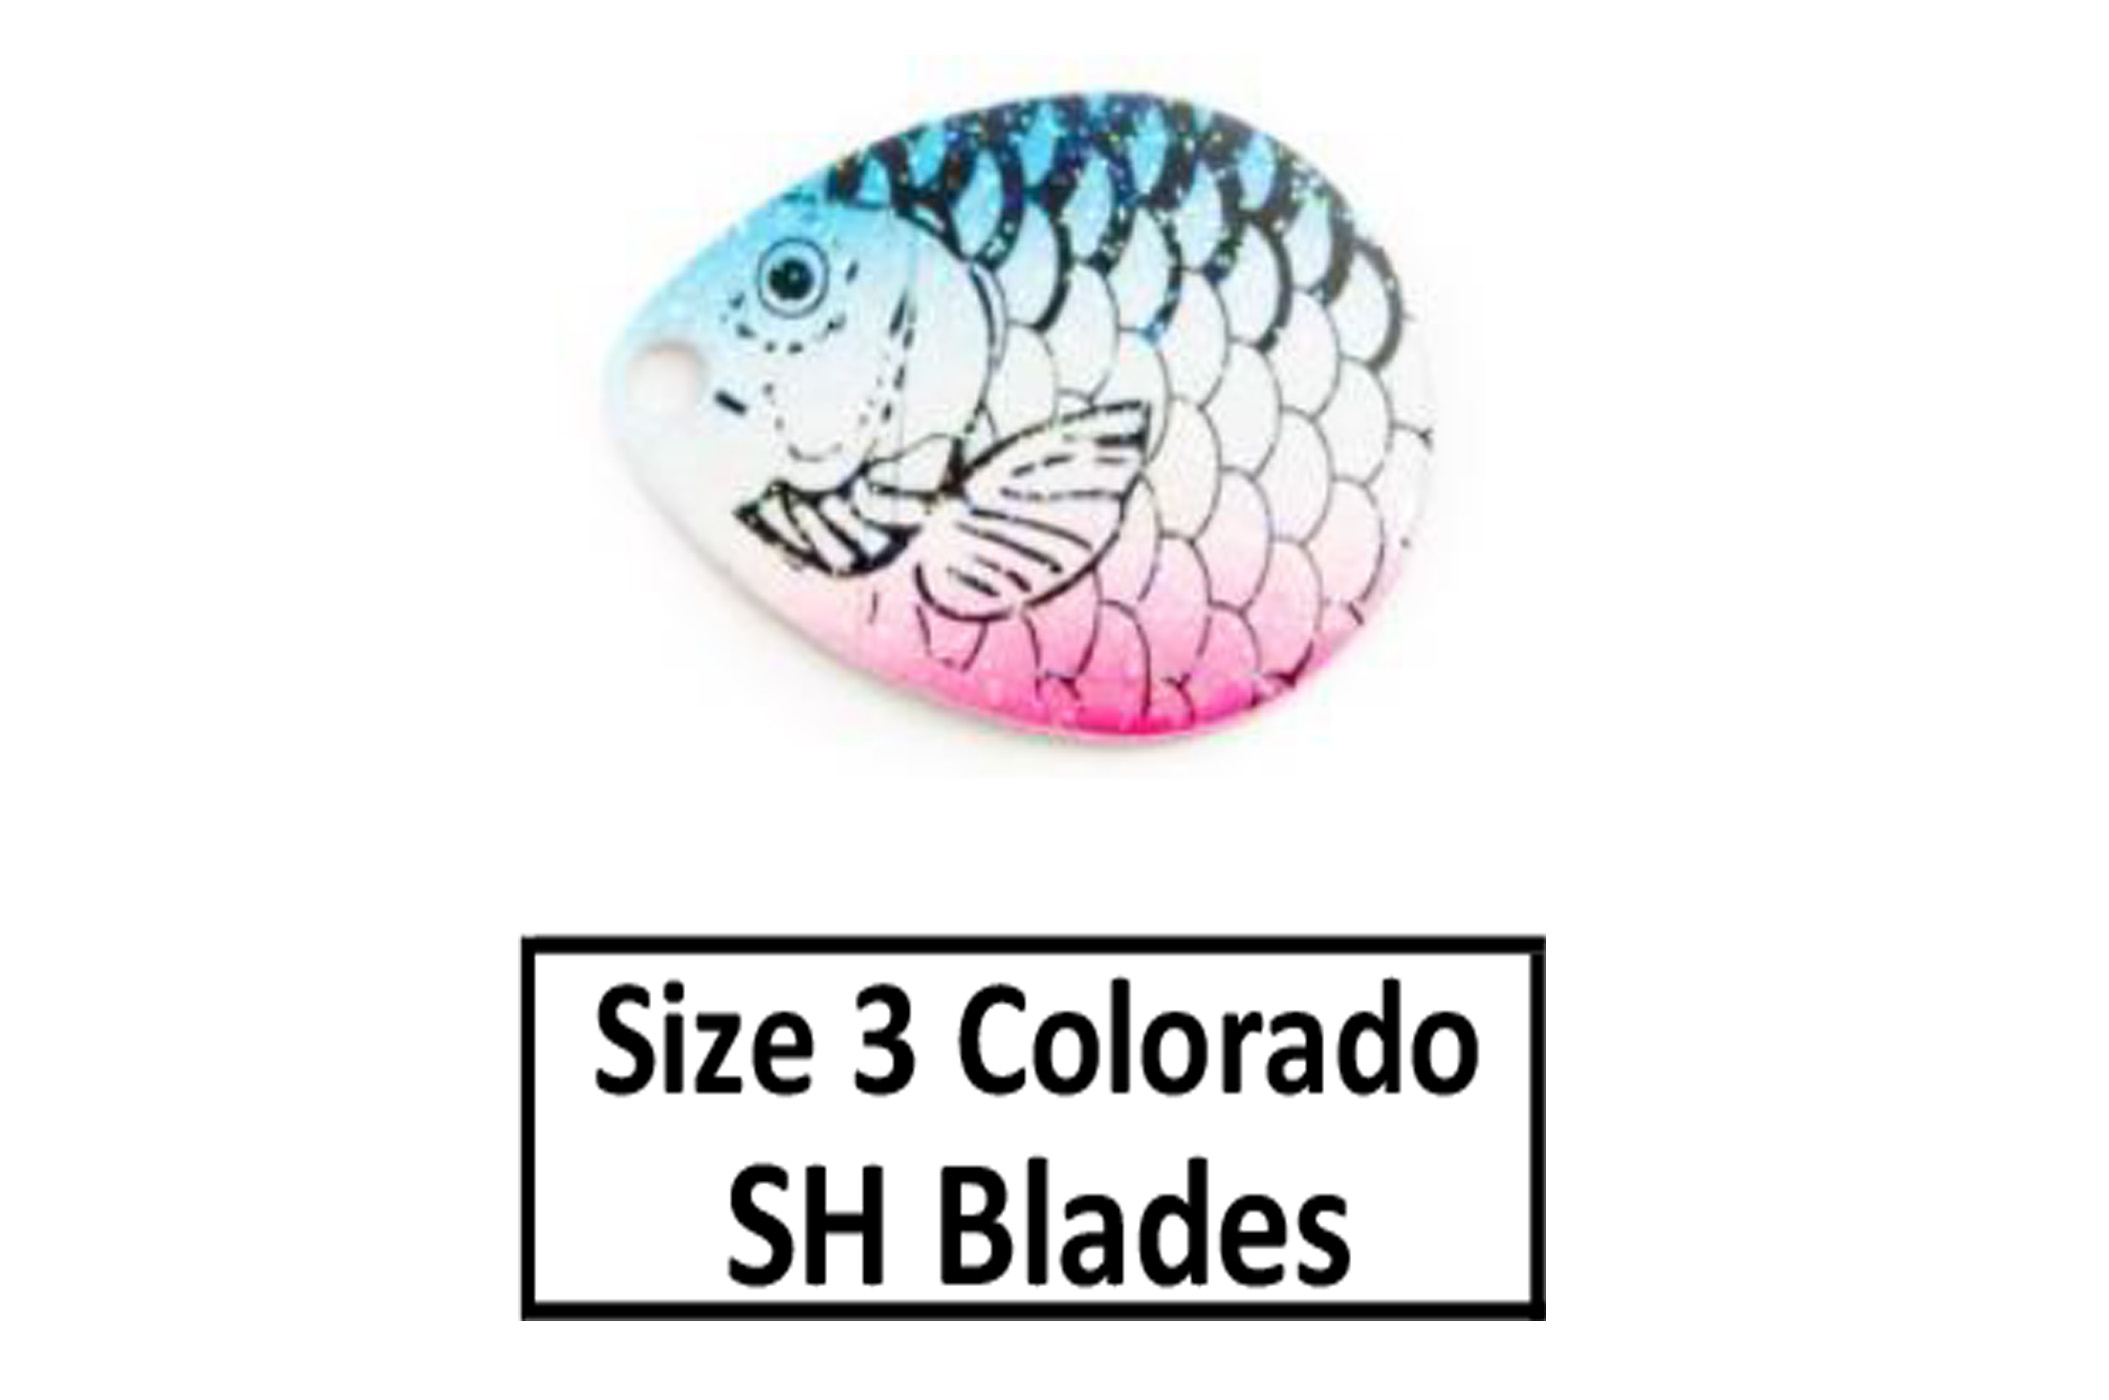 Size 3 Colorado Proscale Spinner Blades